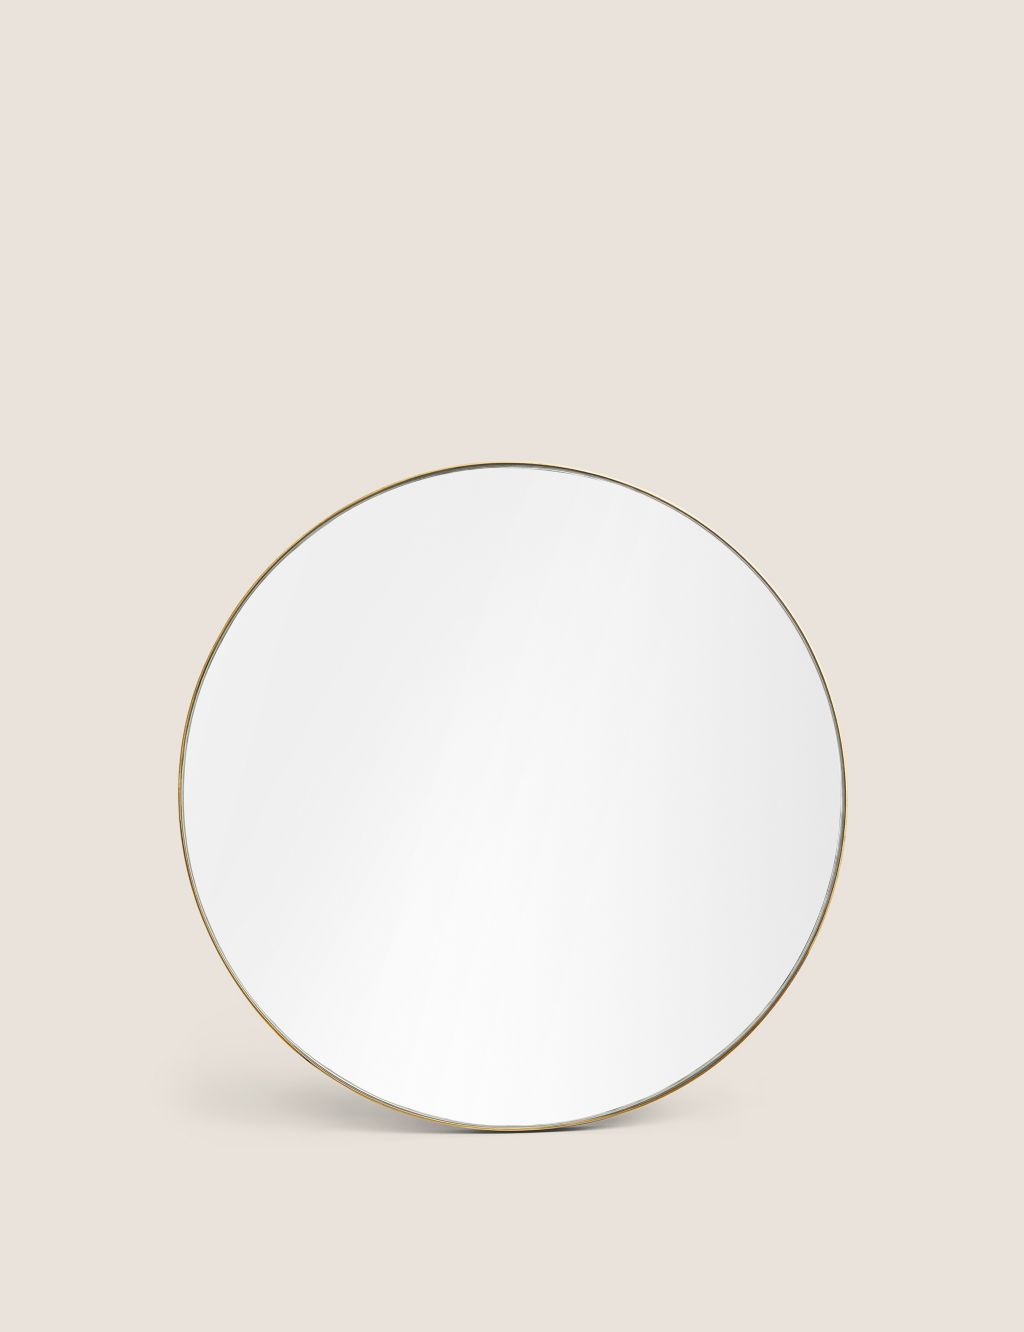 Milan Small Round Mirror image 1